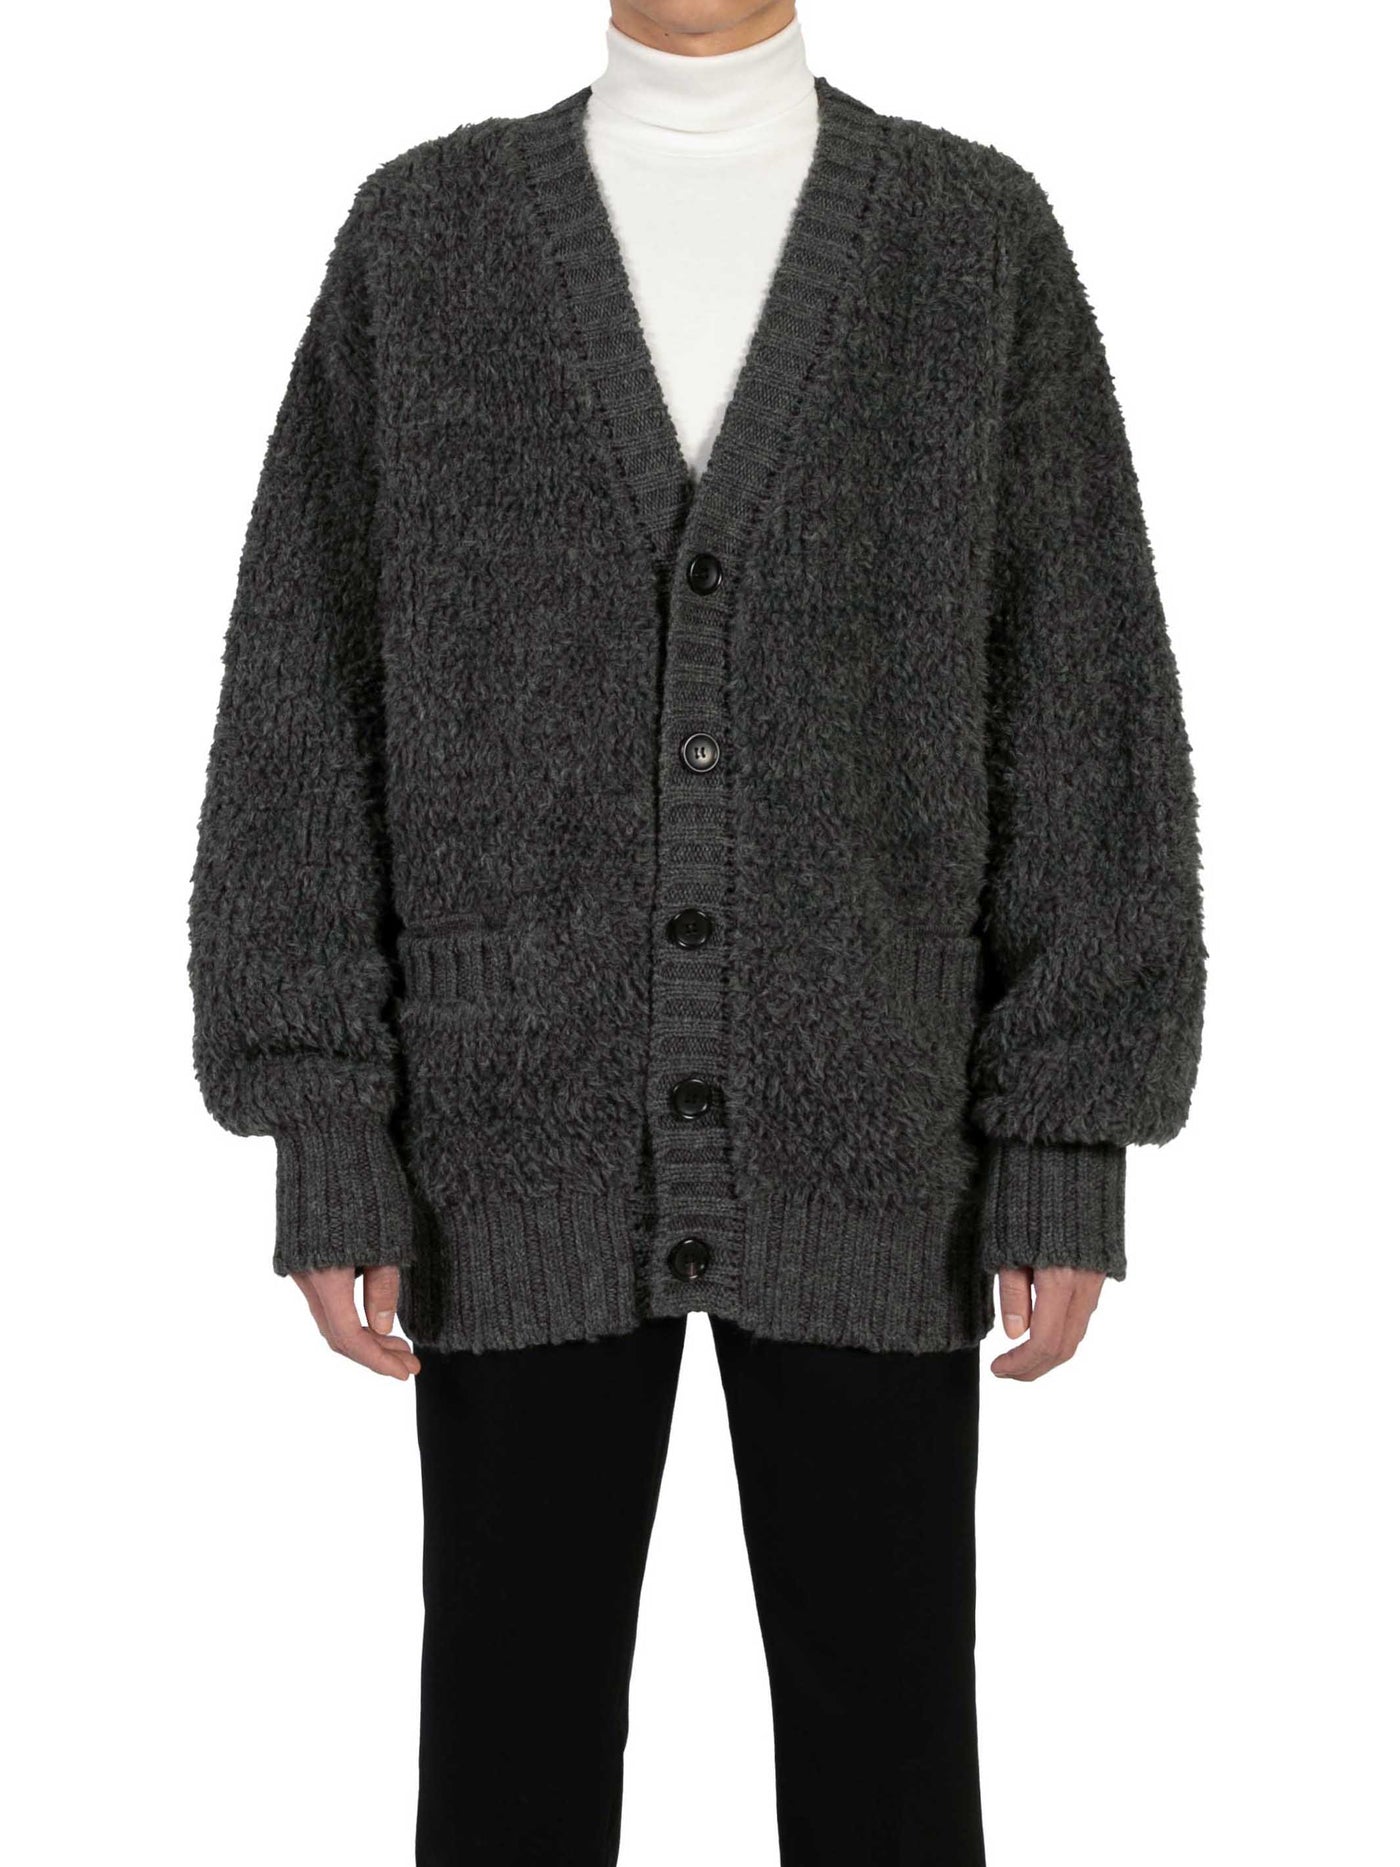 Oversized fur knit cardigan